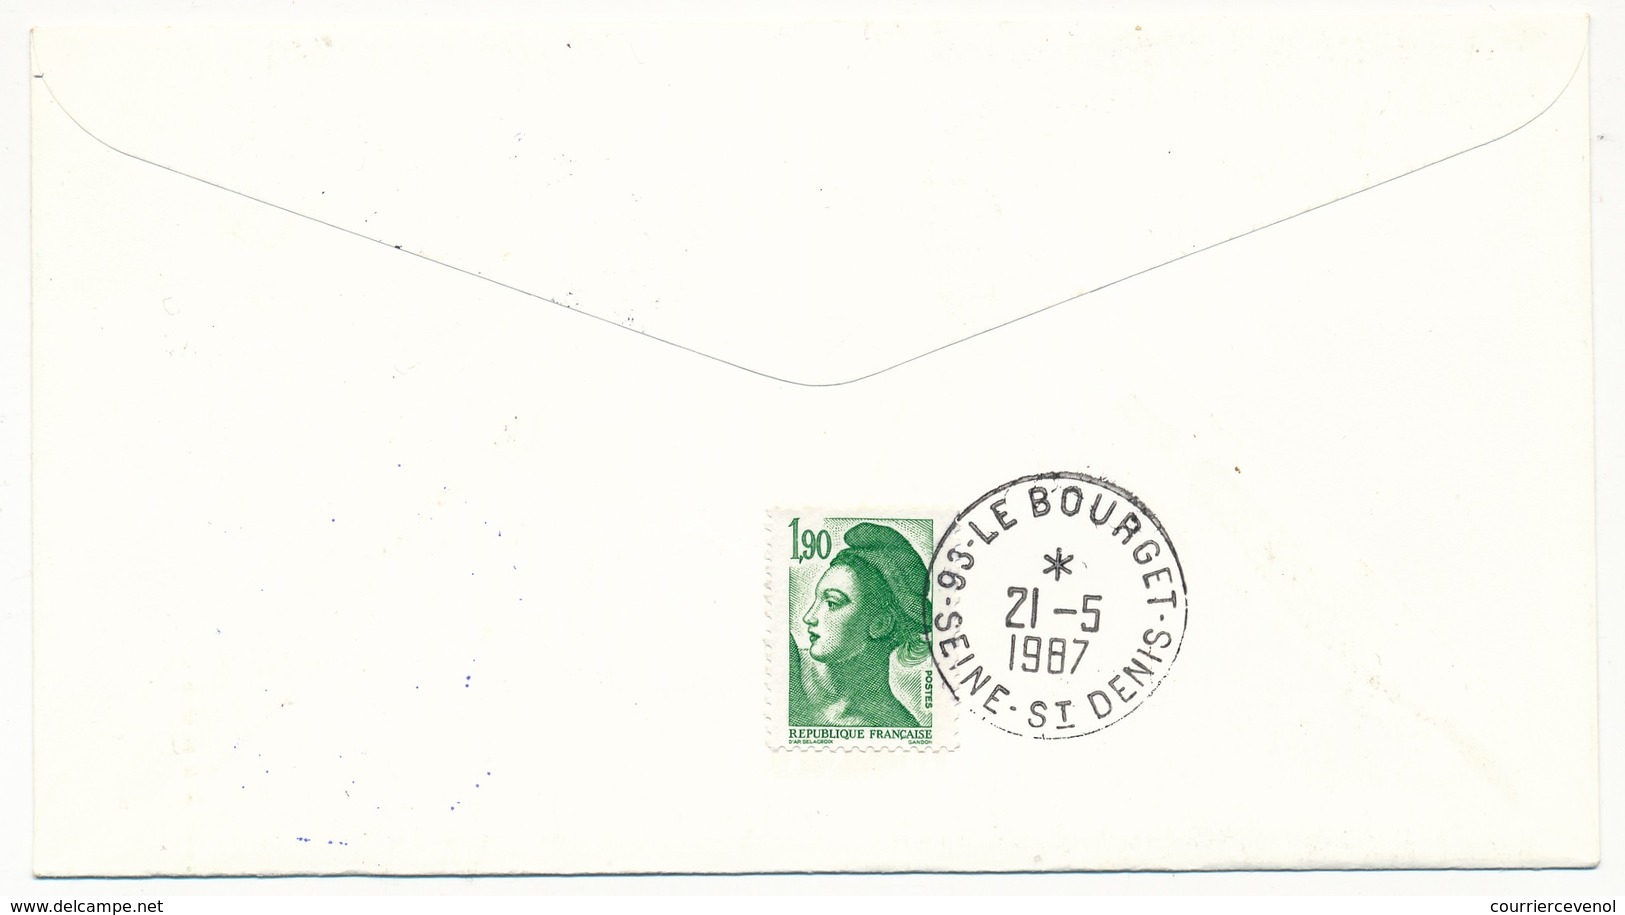 Enveloppe Commémorative -  60eme Anniversaire Traversée De Lindberg - VOL SPECIAL CONCORDE 21/05/1987 - Briefe U. Dokumente